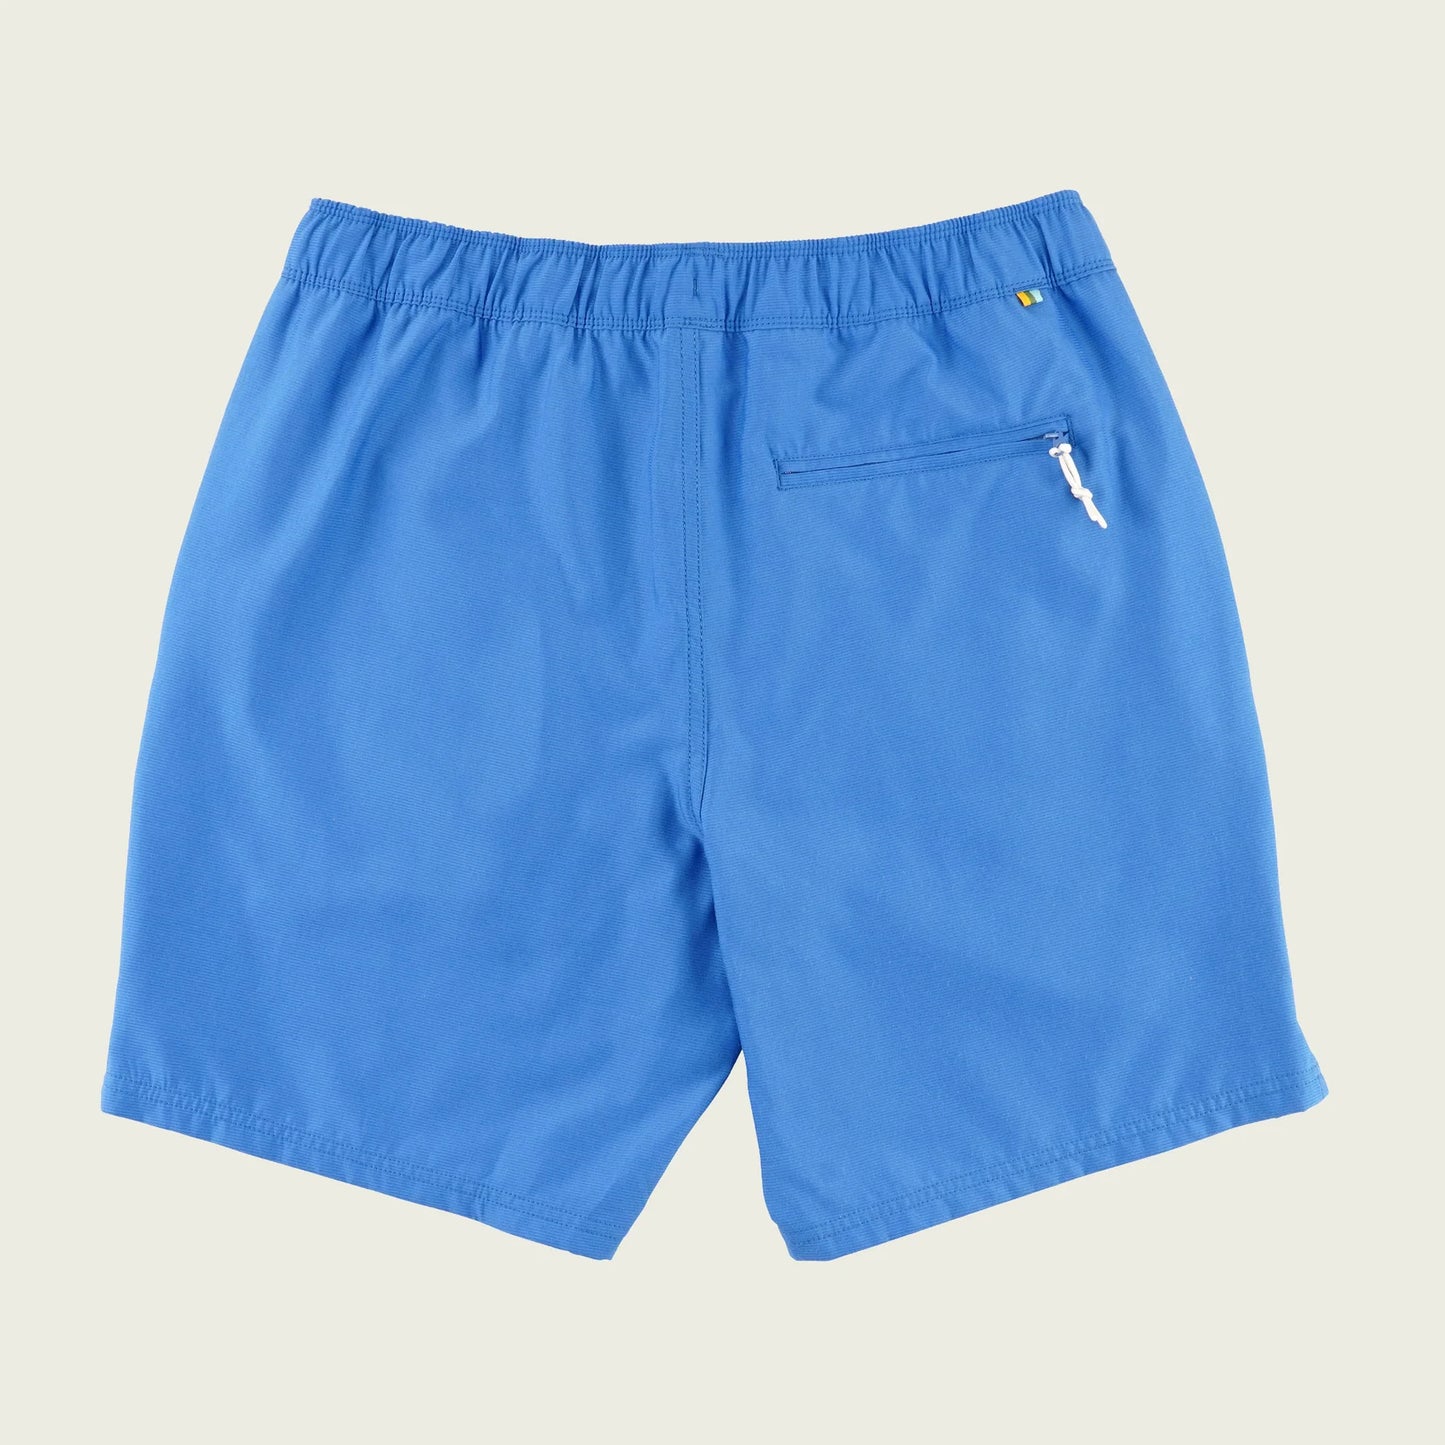 Marsh Wear Cooper Volley Shorts- Riviera Blue